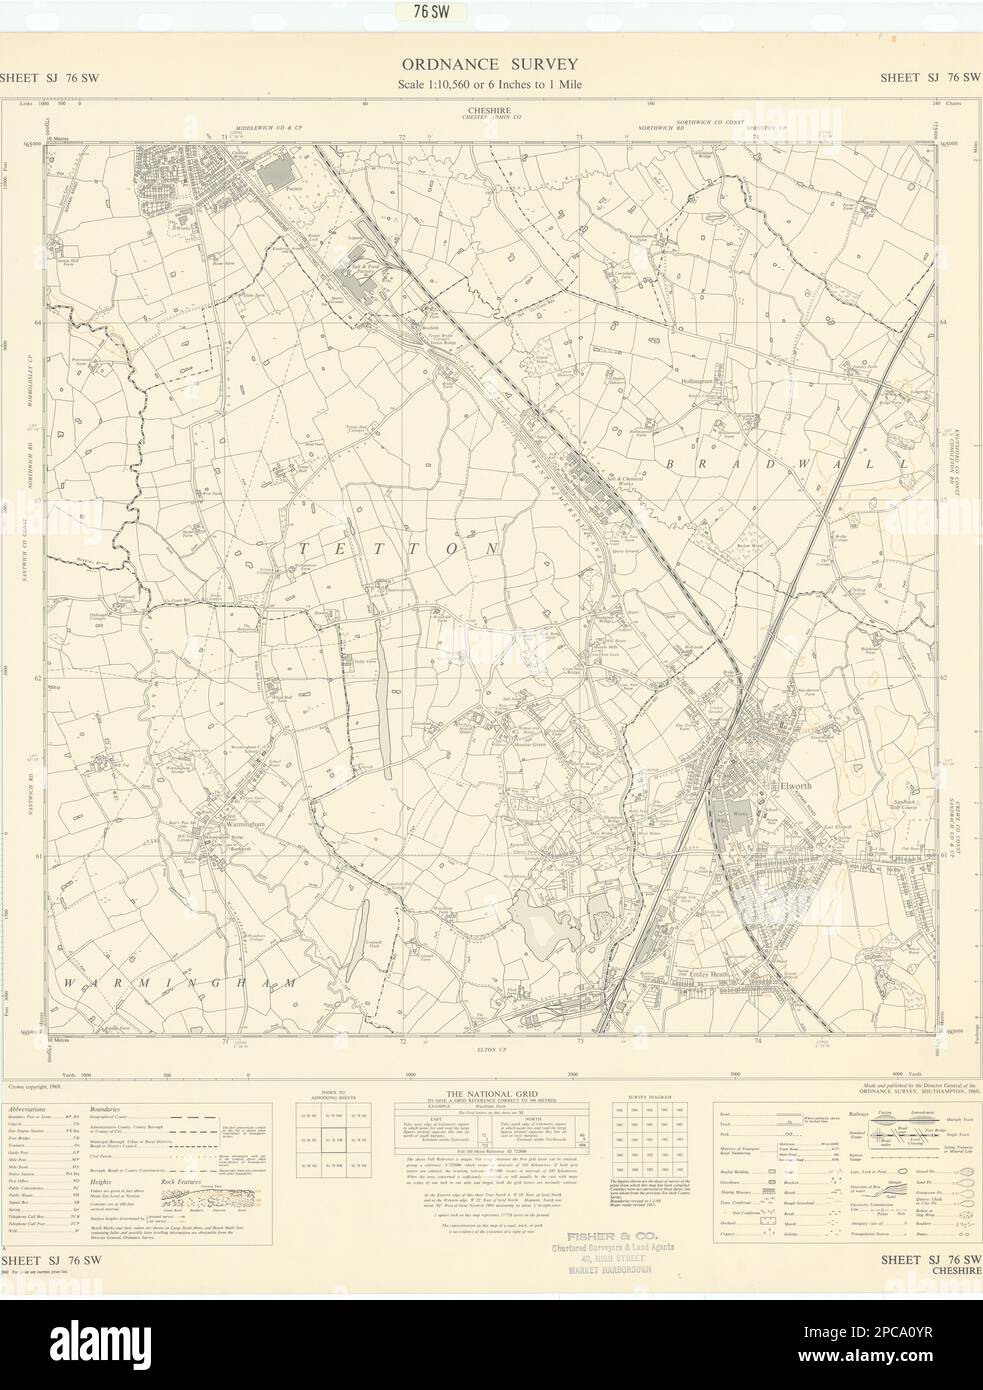 Hoja de encuesta de ordnance SJ76SW Cheshire Elworth Middlewich Warmingham 1969 mapa Foto de stock